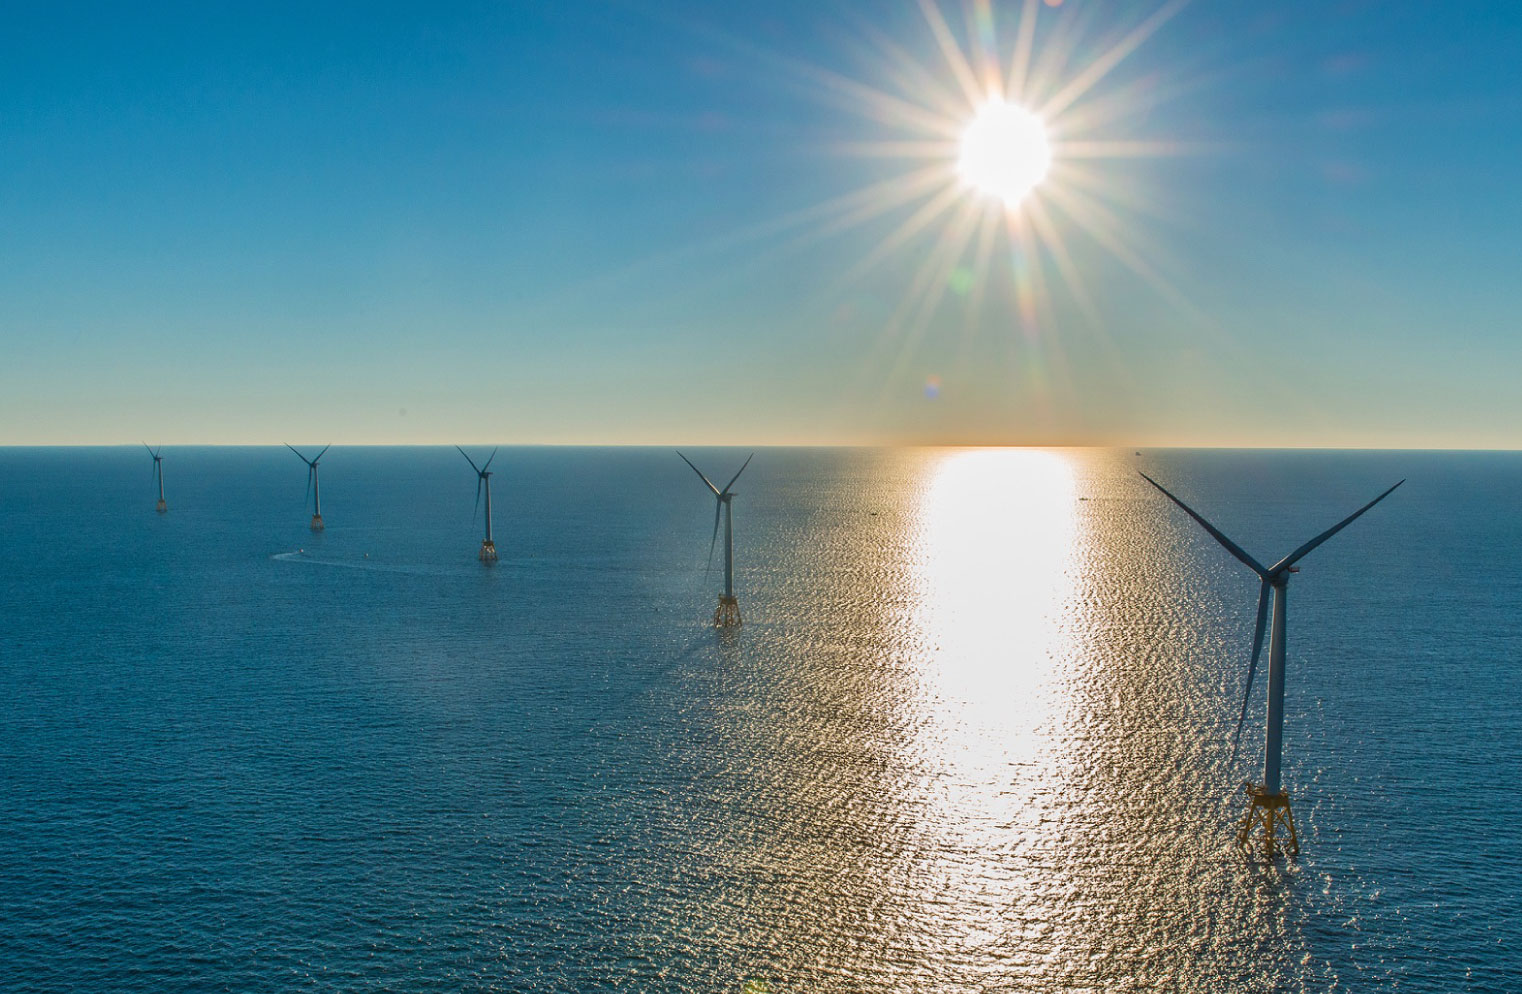 Panoramic view of wind turbines standing in ocean water.